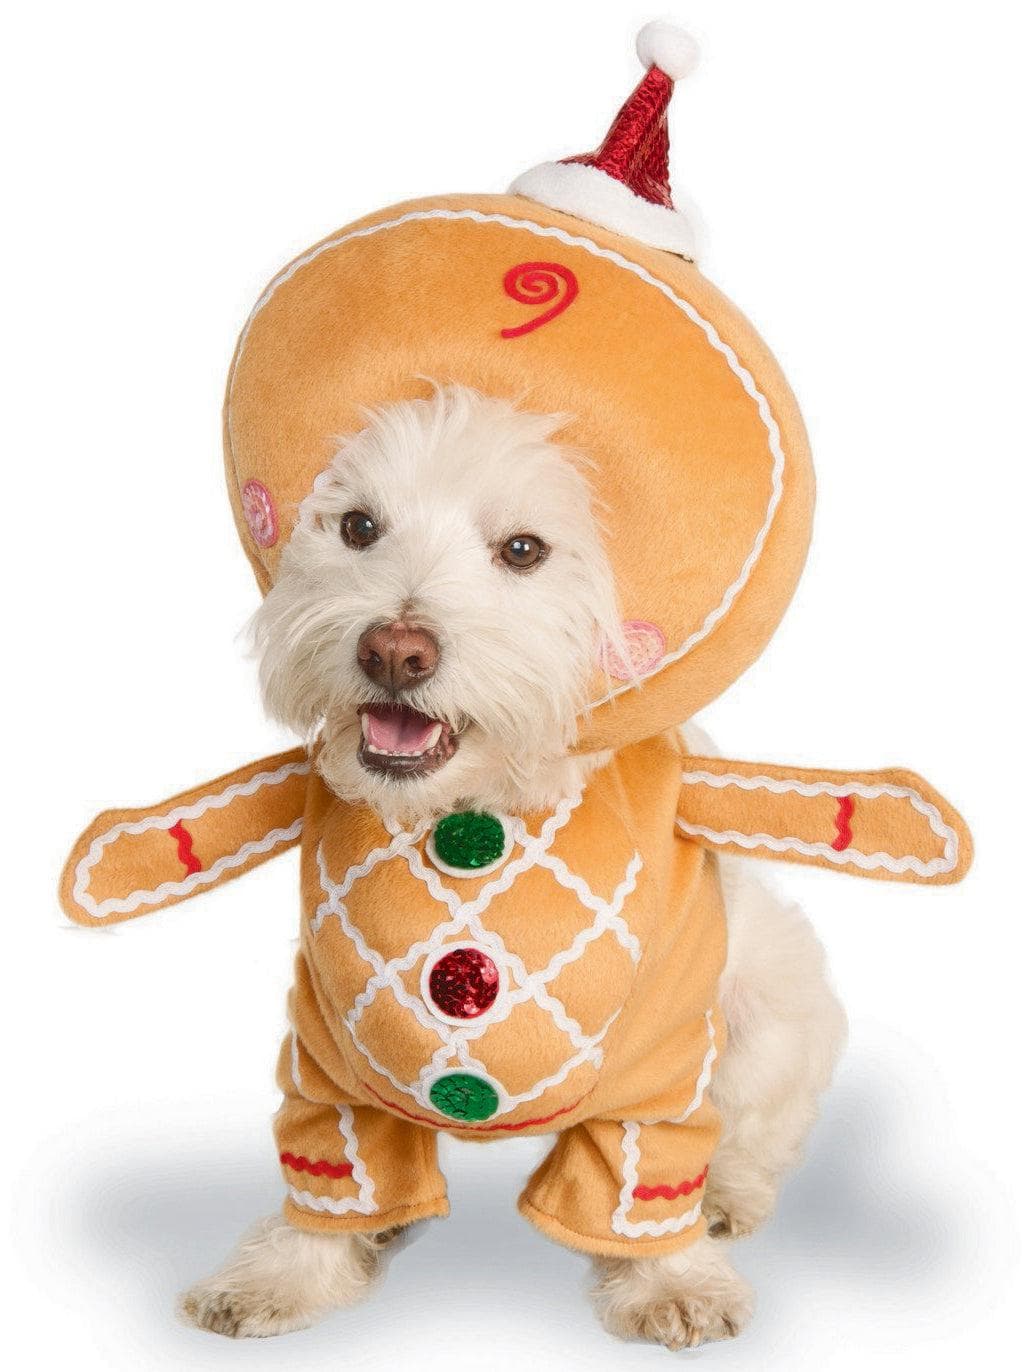 Pet Gingerbread Man Costume - costumes.com